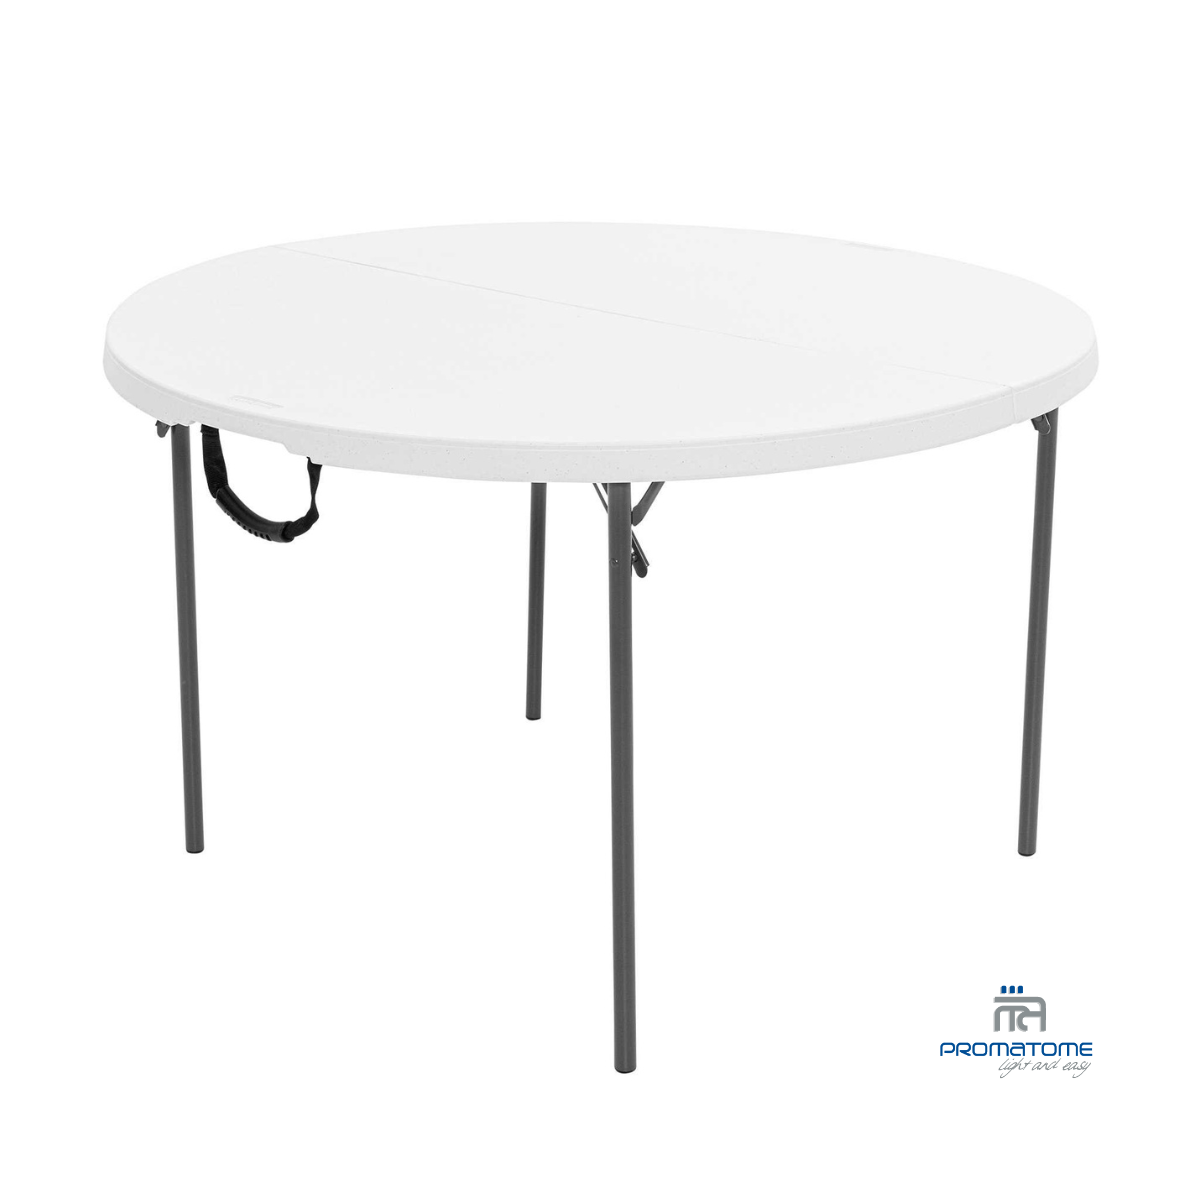 Table pliante en malette ronde, diamètre 150 cm